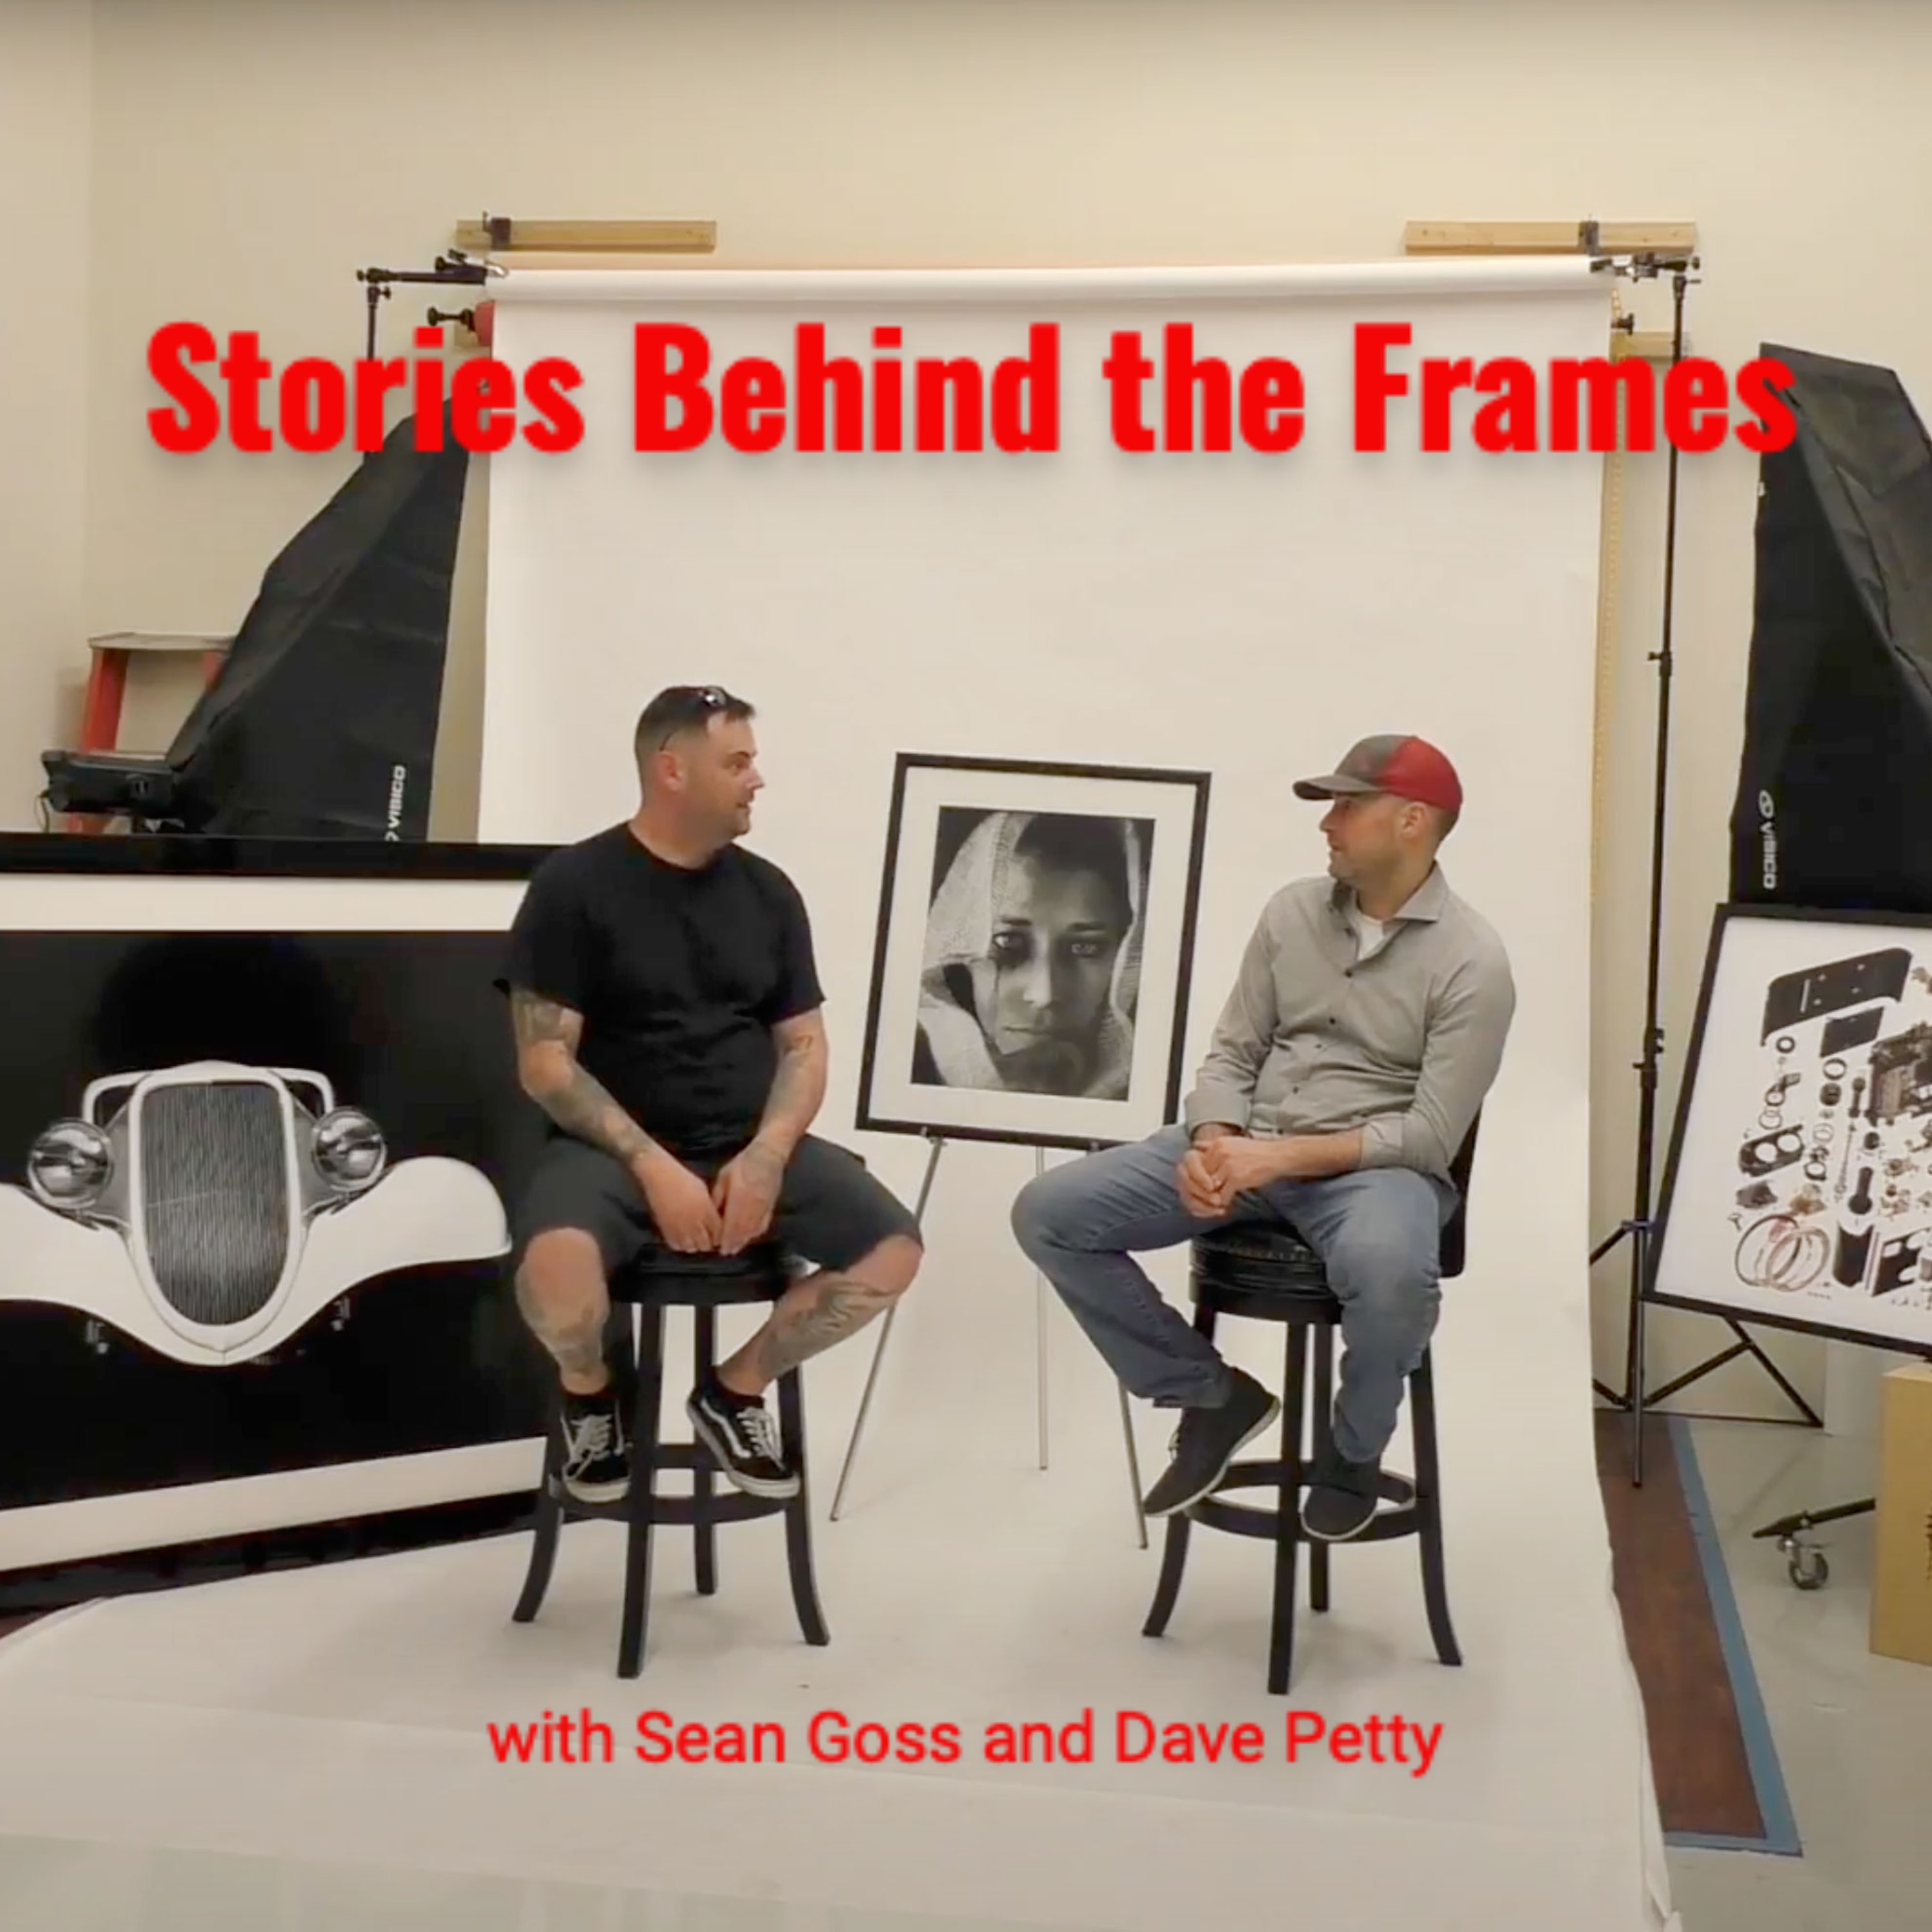 Stories Behind the Frames - Sean Goss